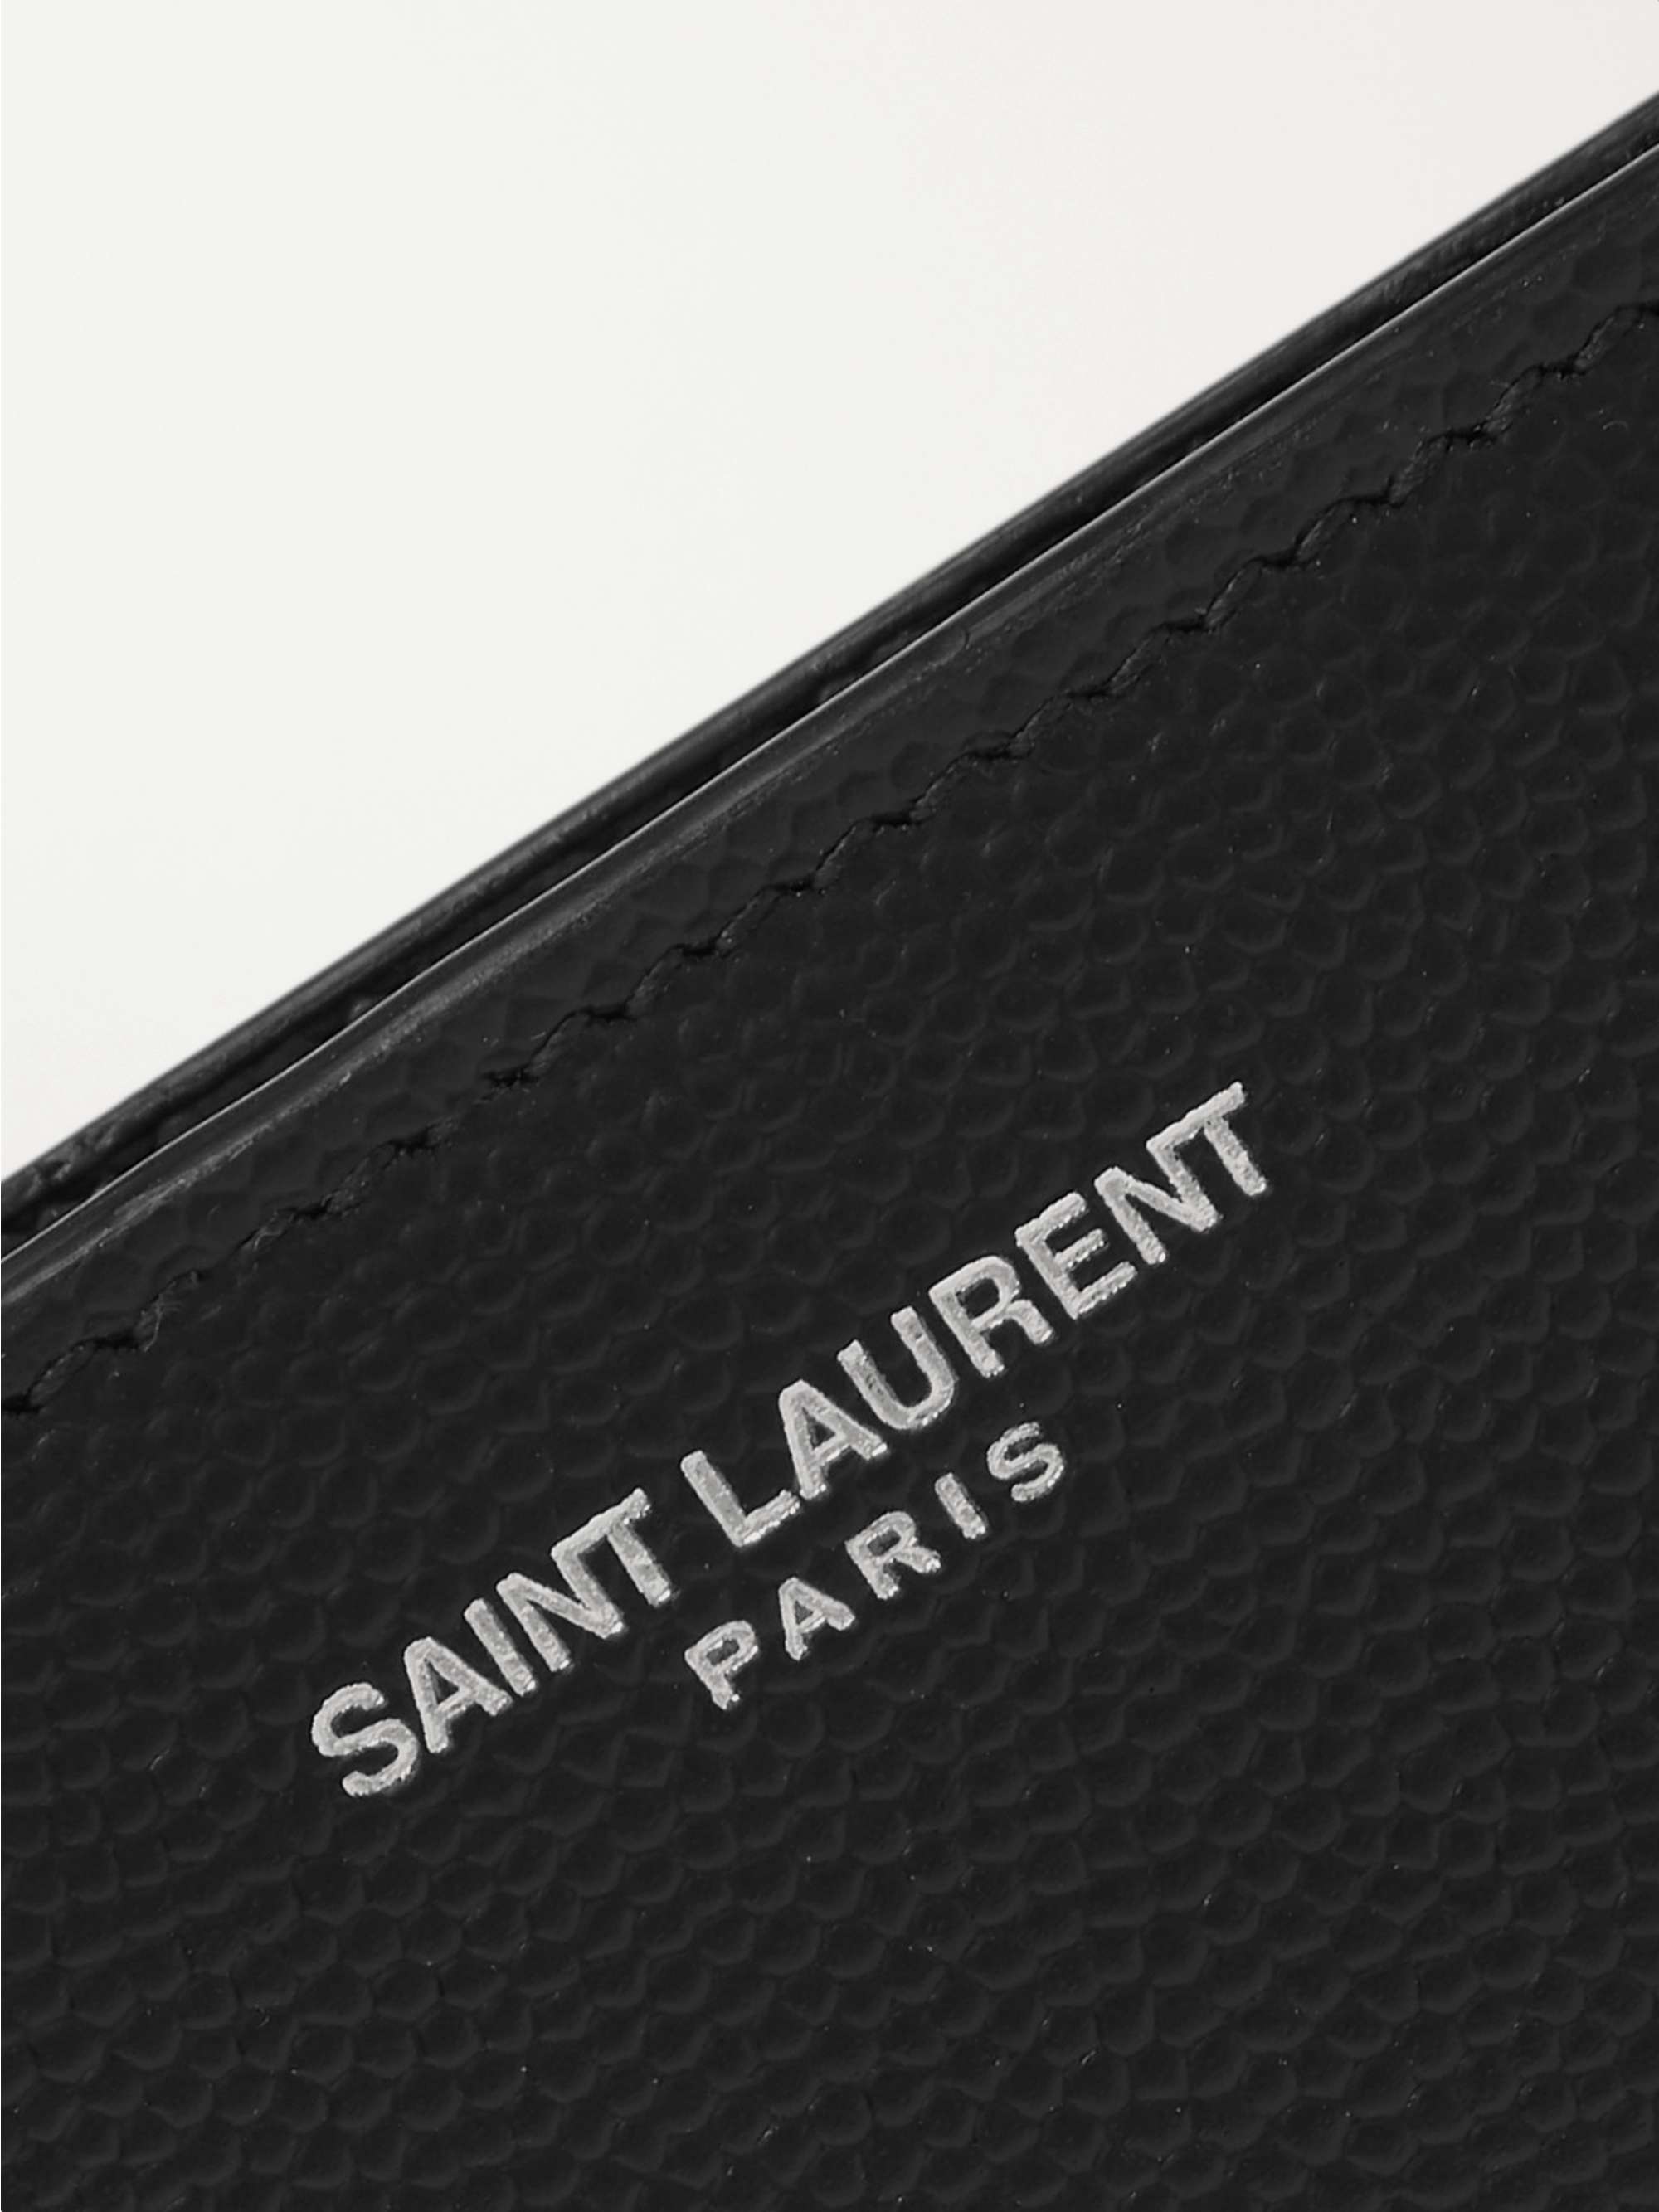 SAINT LAURENT, Logo-Print Pebble-Grain Leather Billfold Wallet, Men, Neutrals